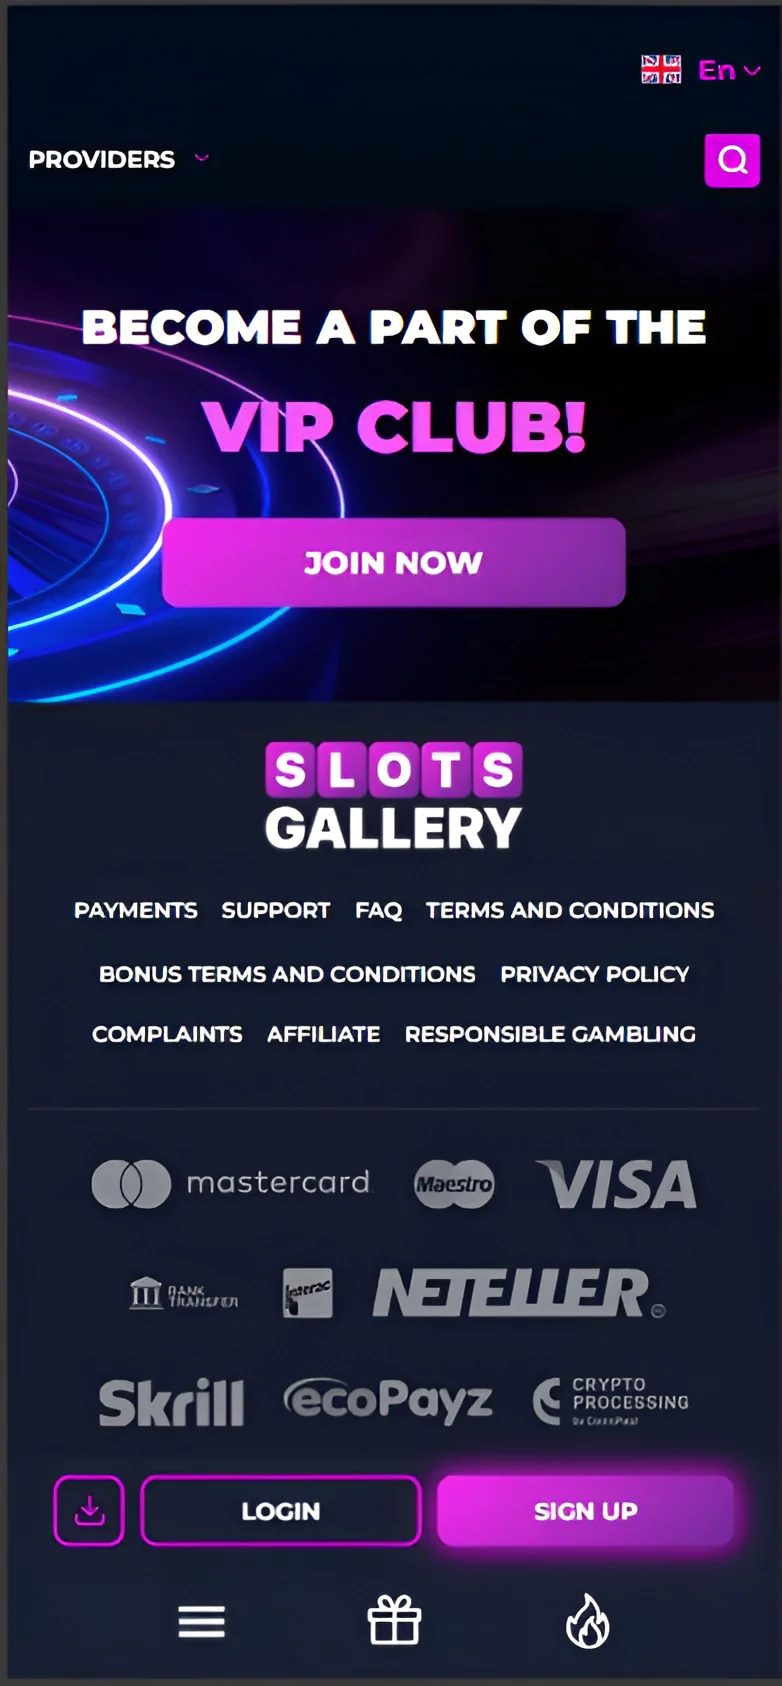 Slots Gallery Brasil - Clube VIP para jogadores selecionados no aplicativo móvel